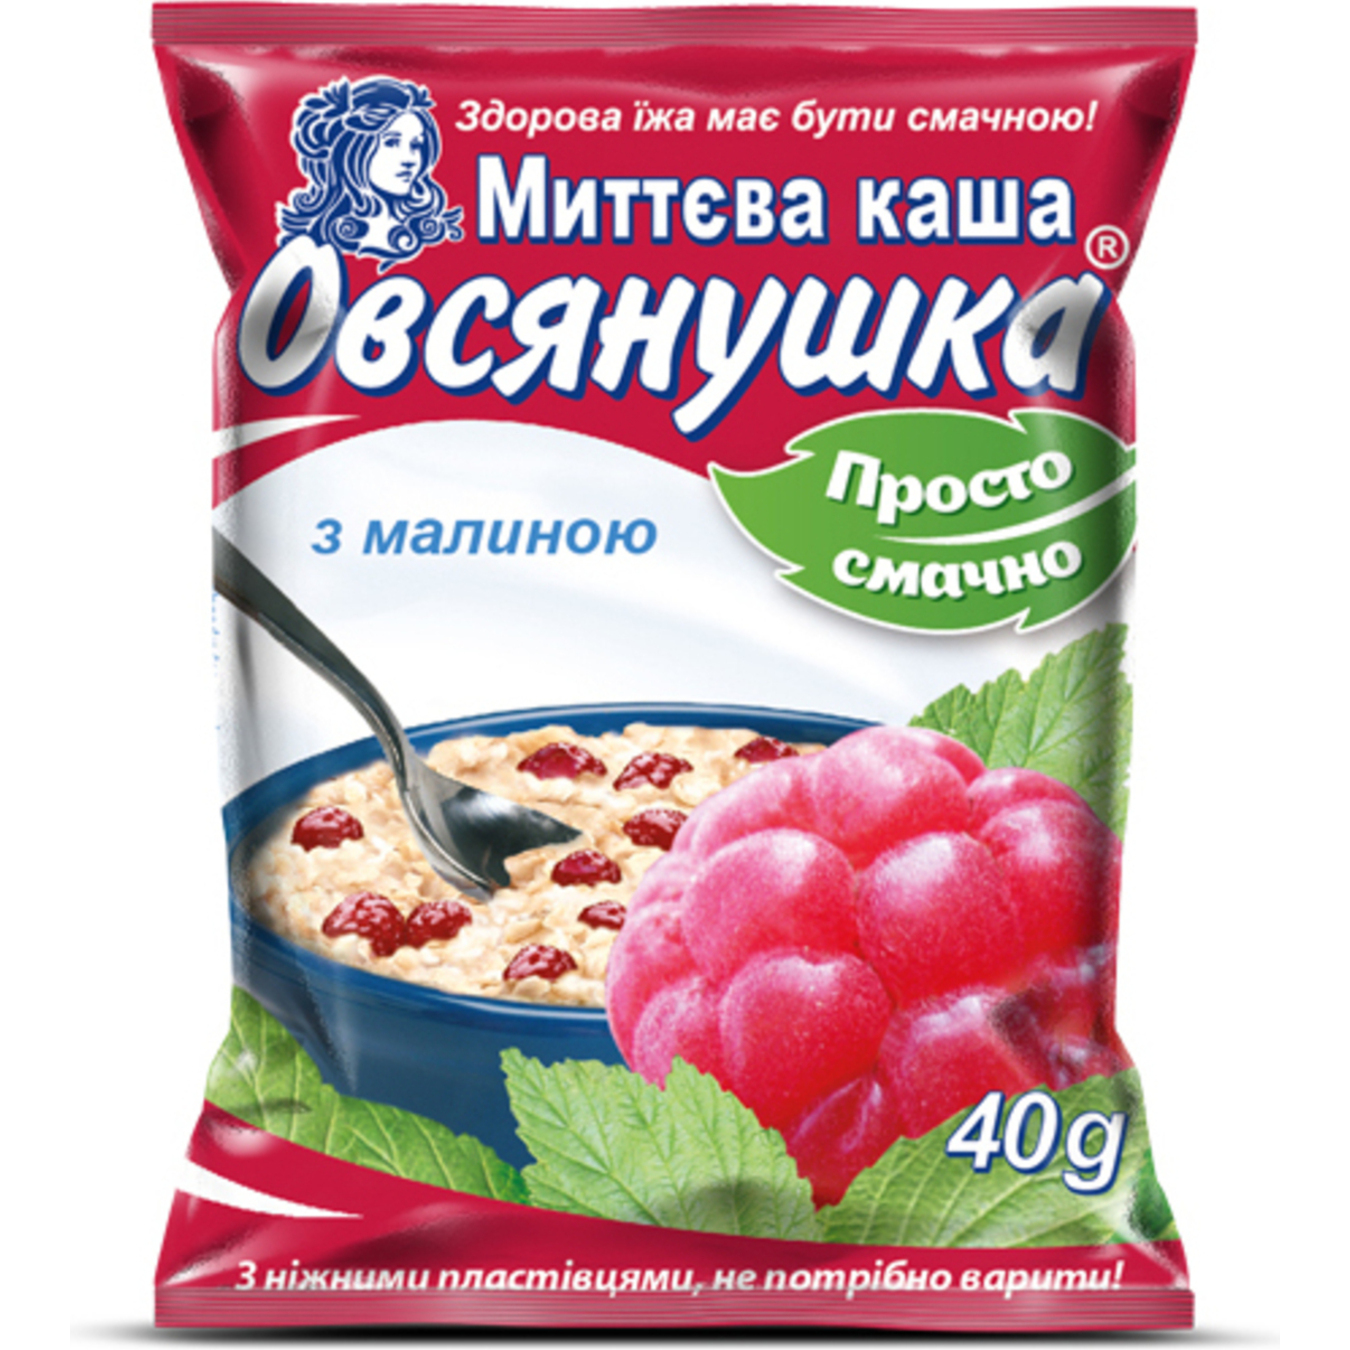 Ovsyanushka Oatmeal Porridge with Raspberries and Sugar Quick-cooking 40g